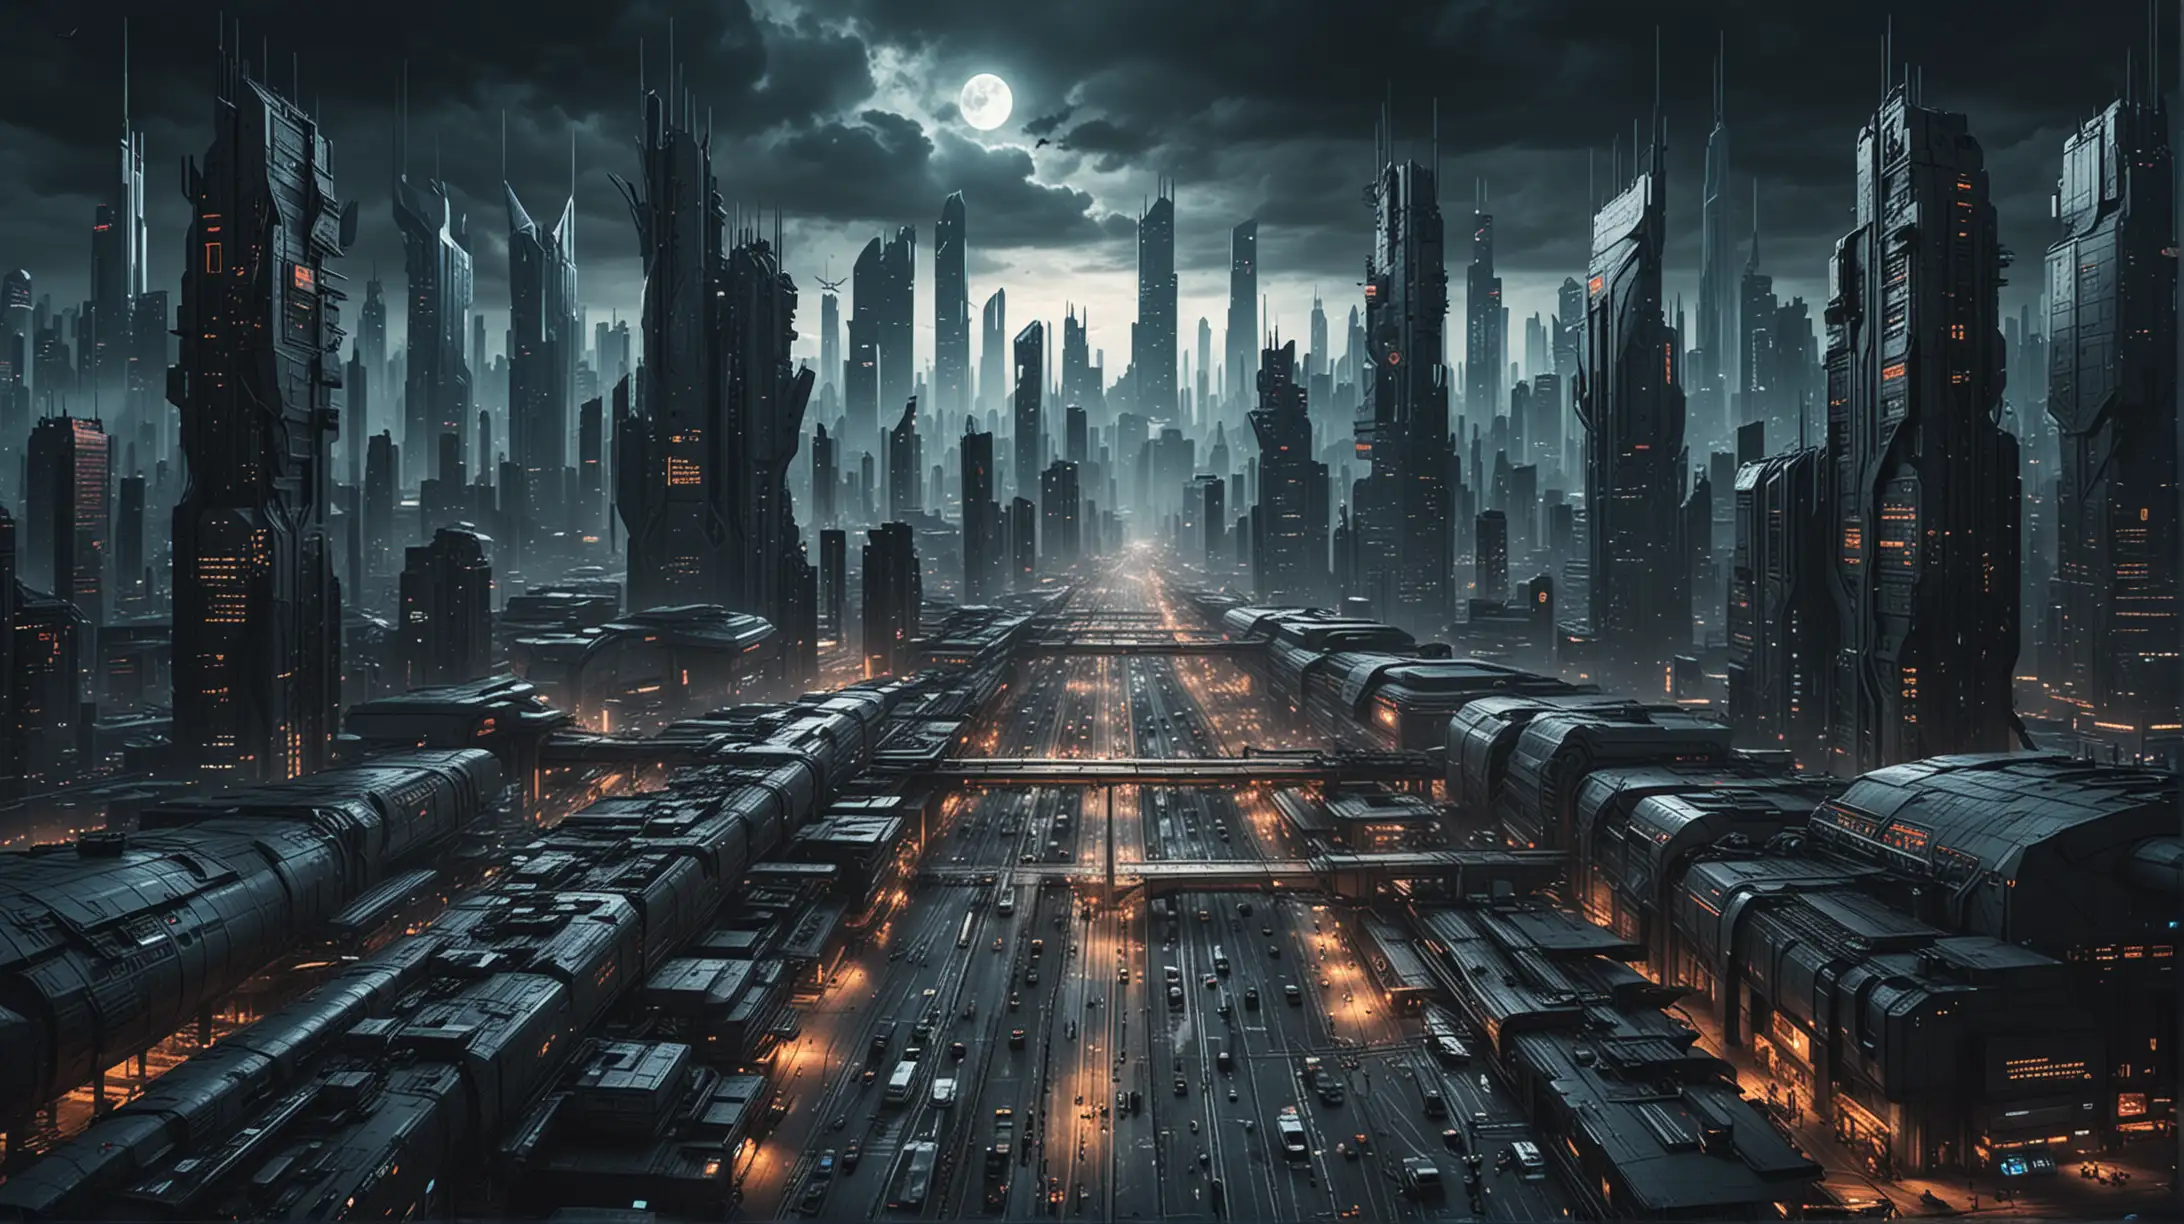 a giant cyberpunk city with skyscrapers, aeroport, railway station, steel, glass, stone, dark night, bird's eye view